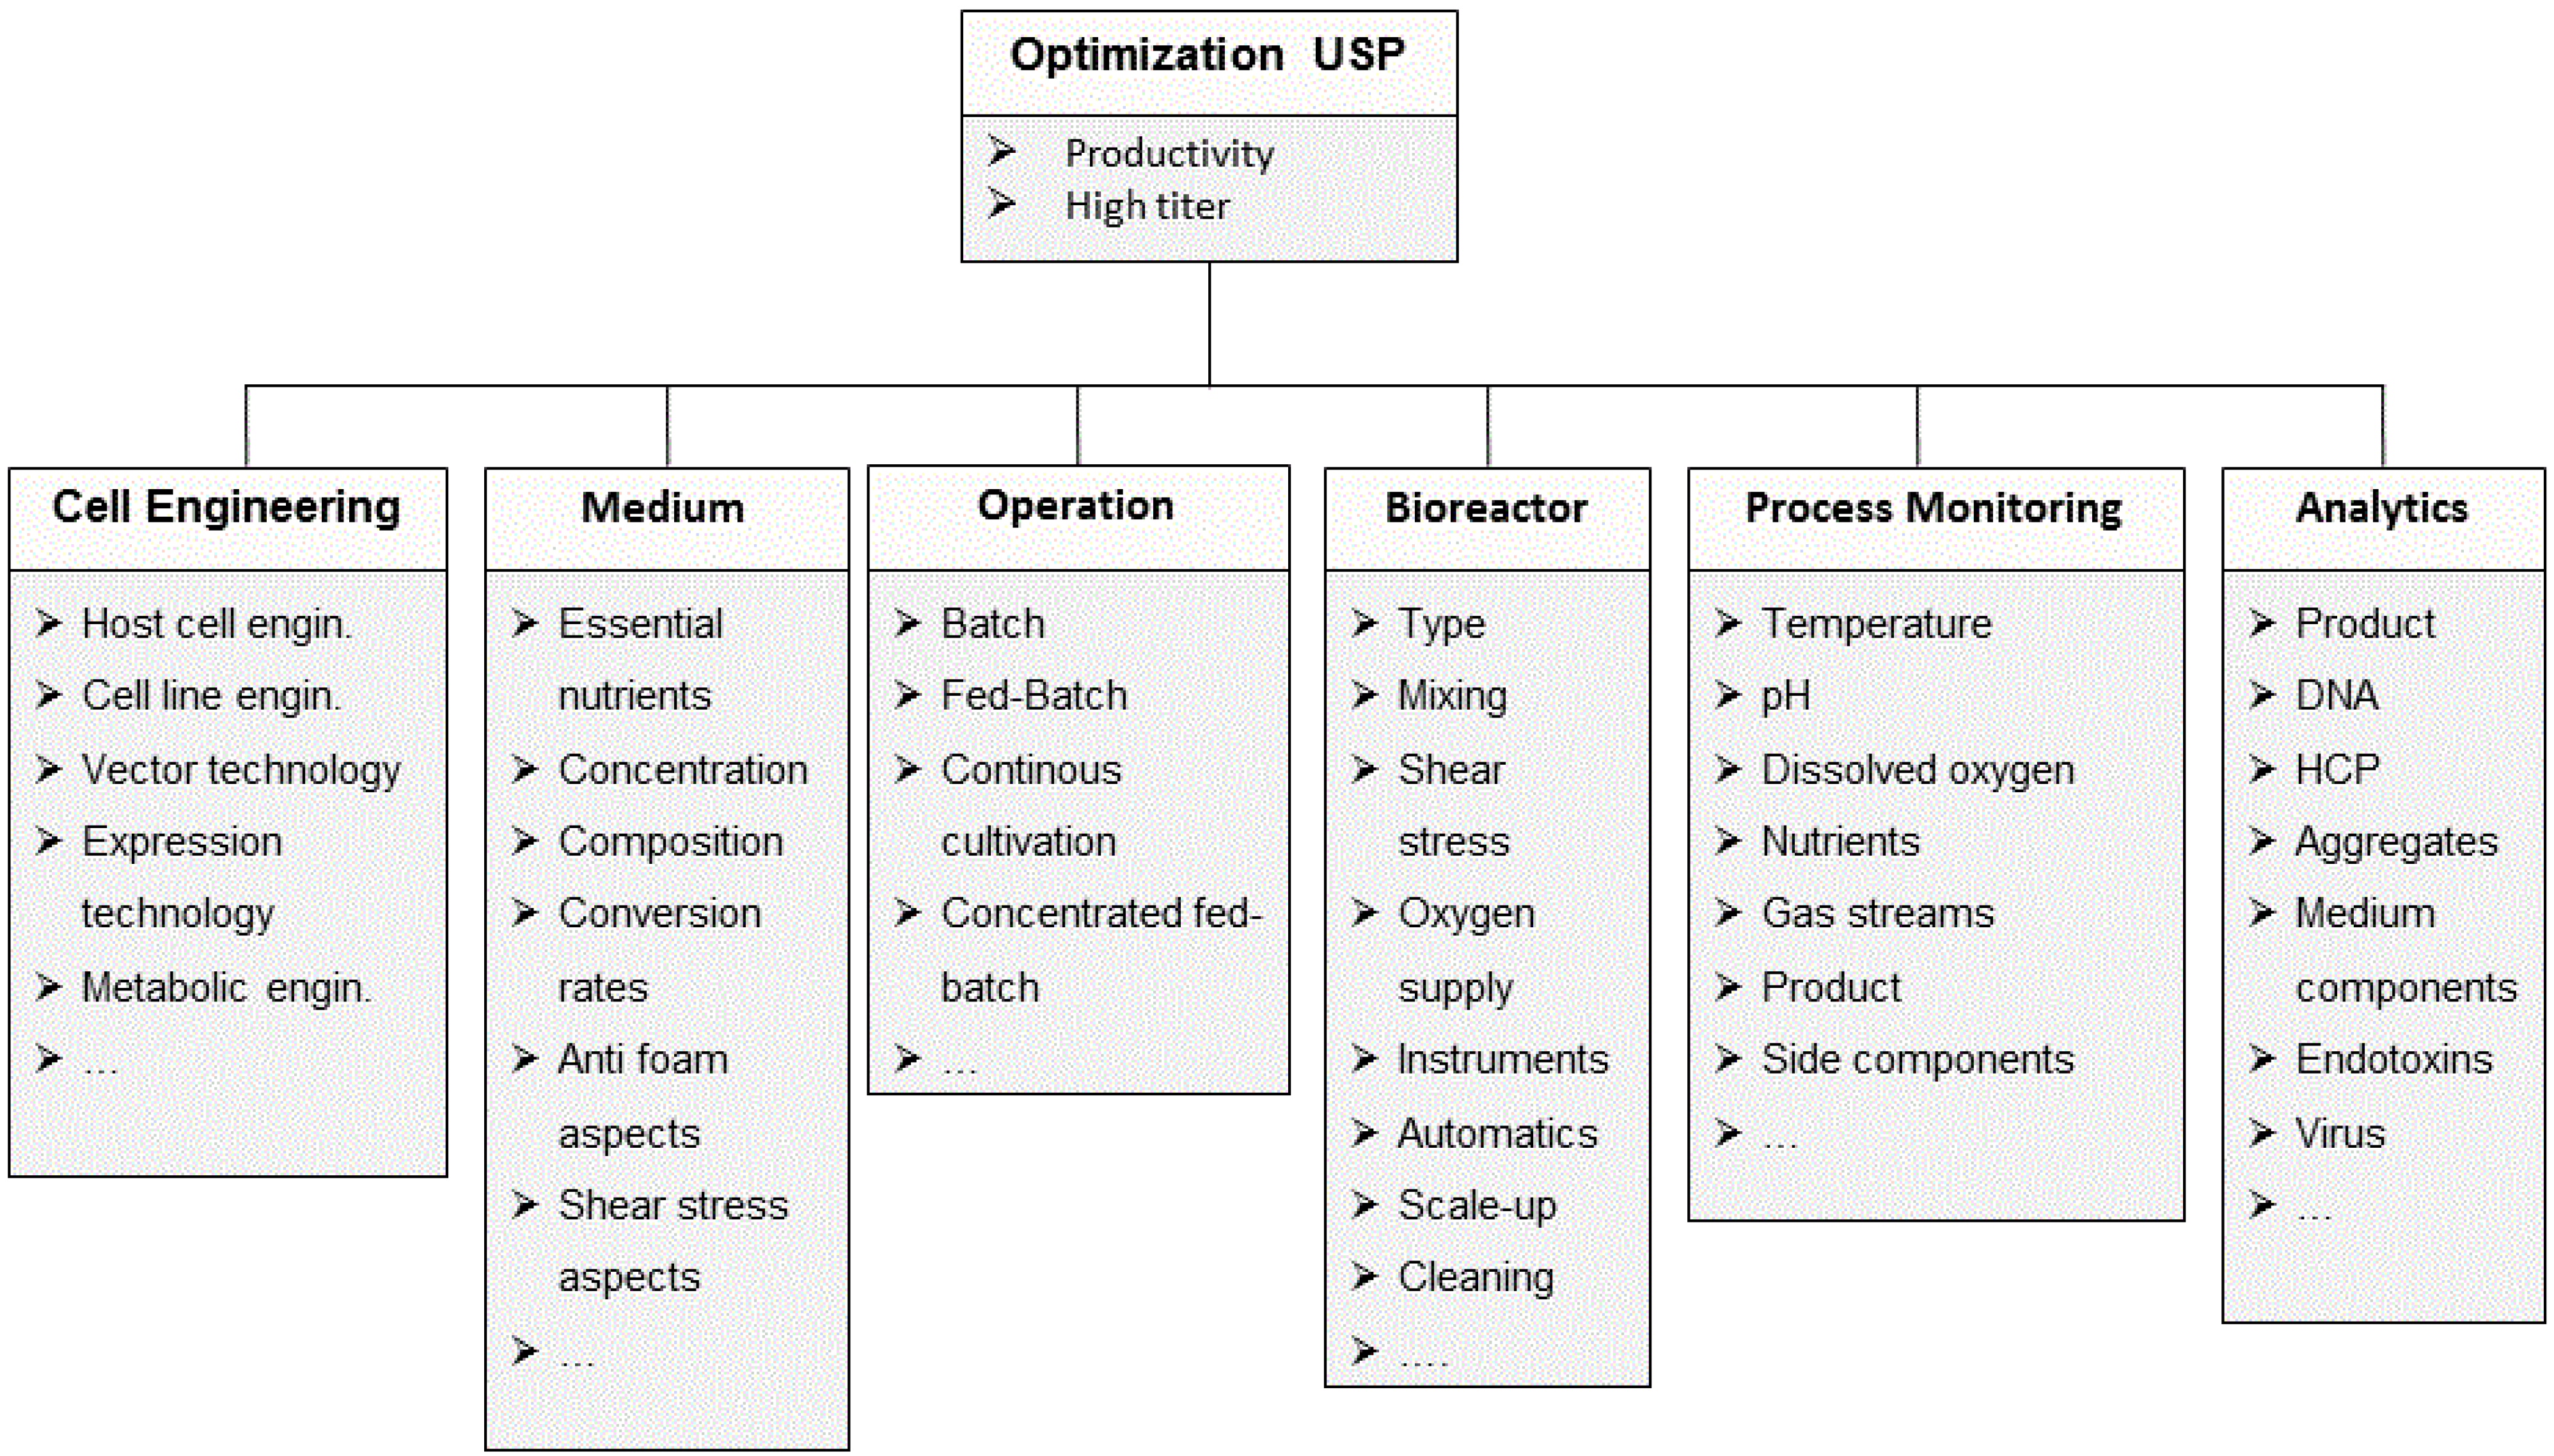 Upstream Processing Flow Chart